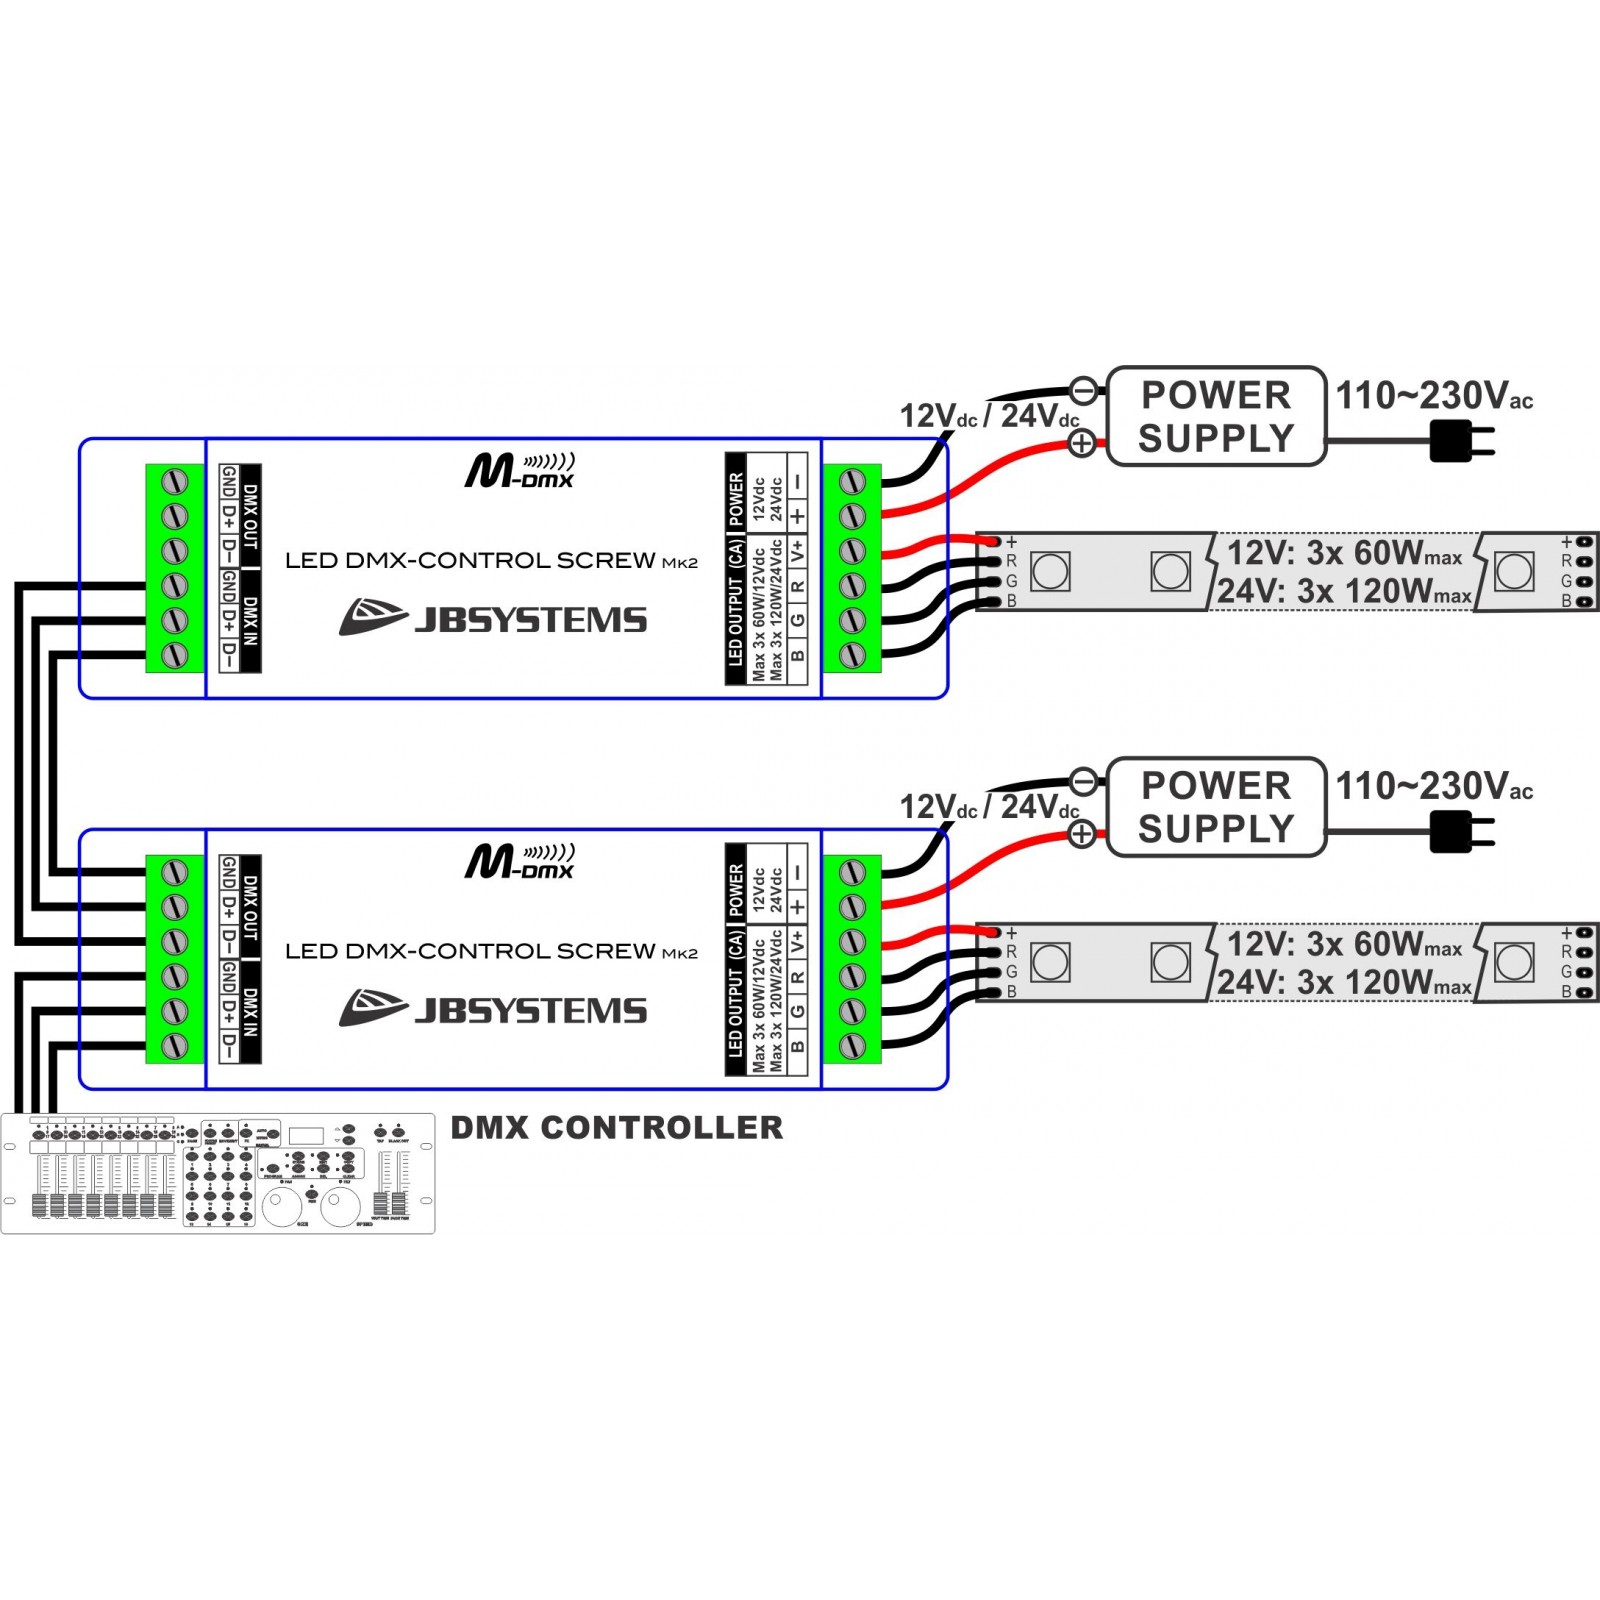 JB Systems | LED DMX-CONTROL SCREW Mk II